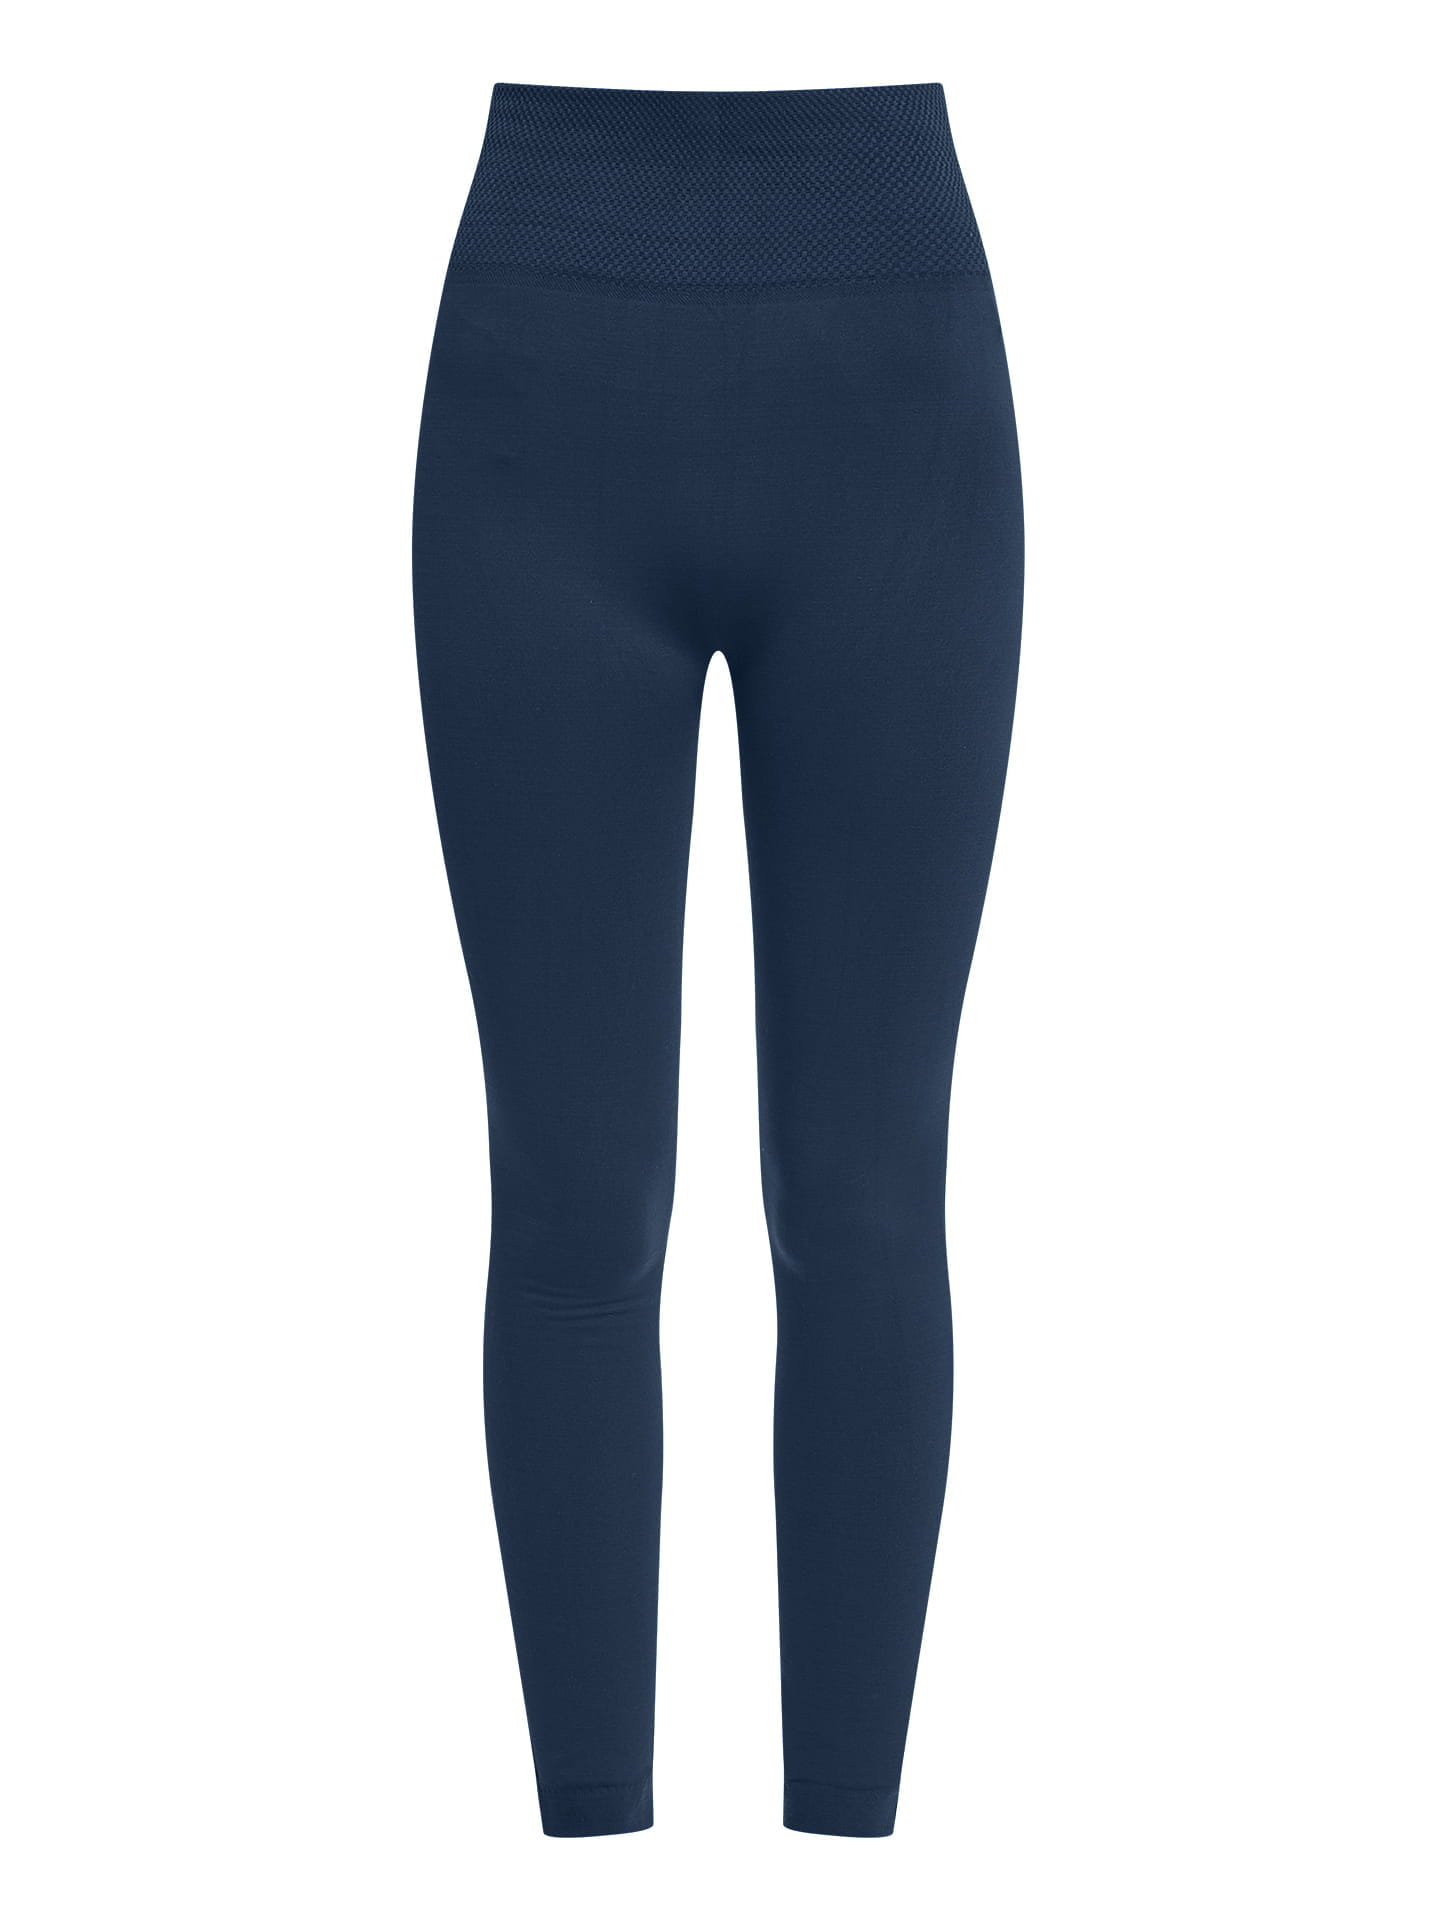 Elastic thermal leggings in dark blue, 6.99€